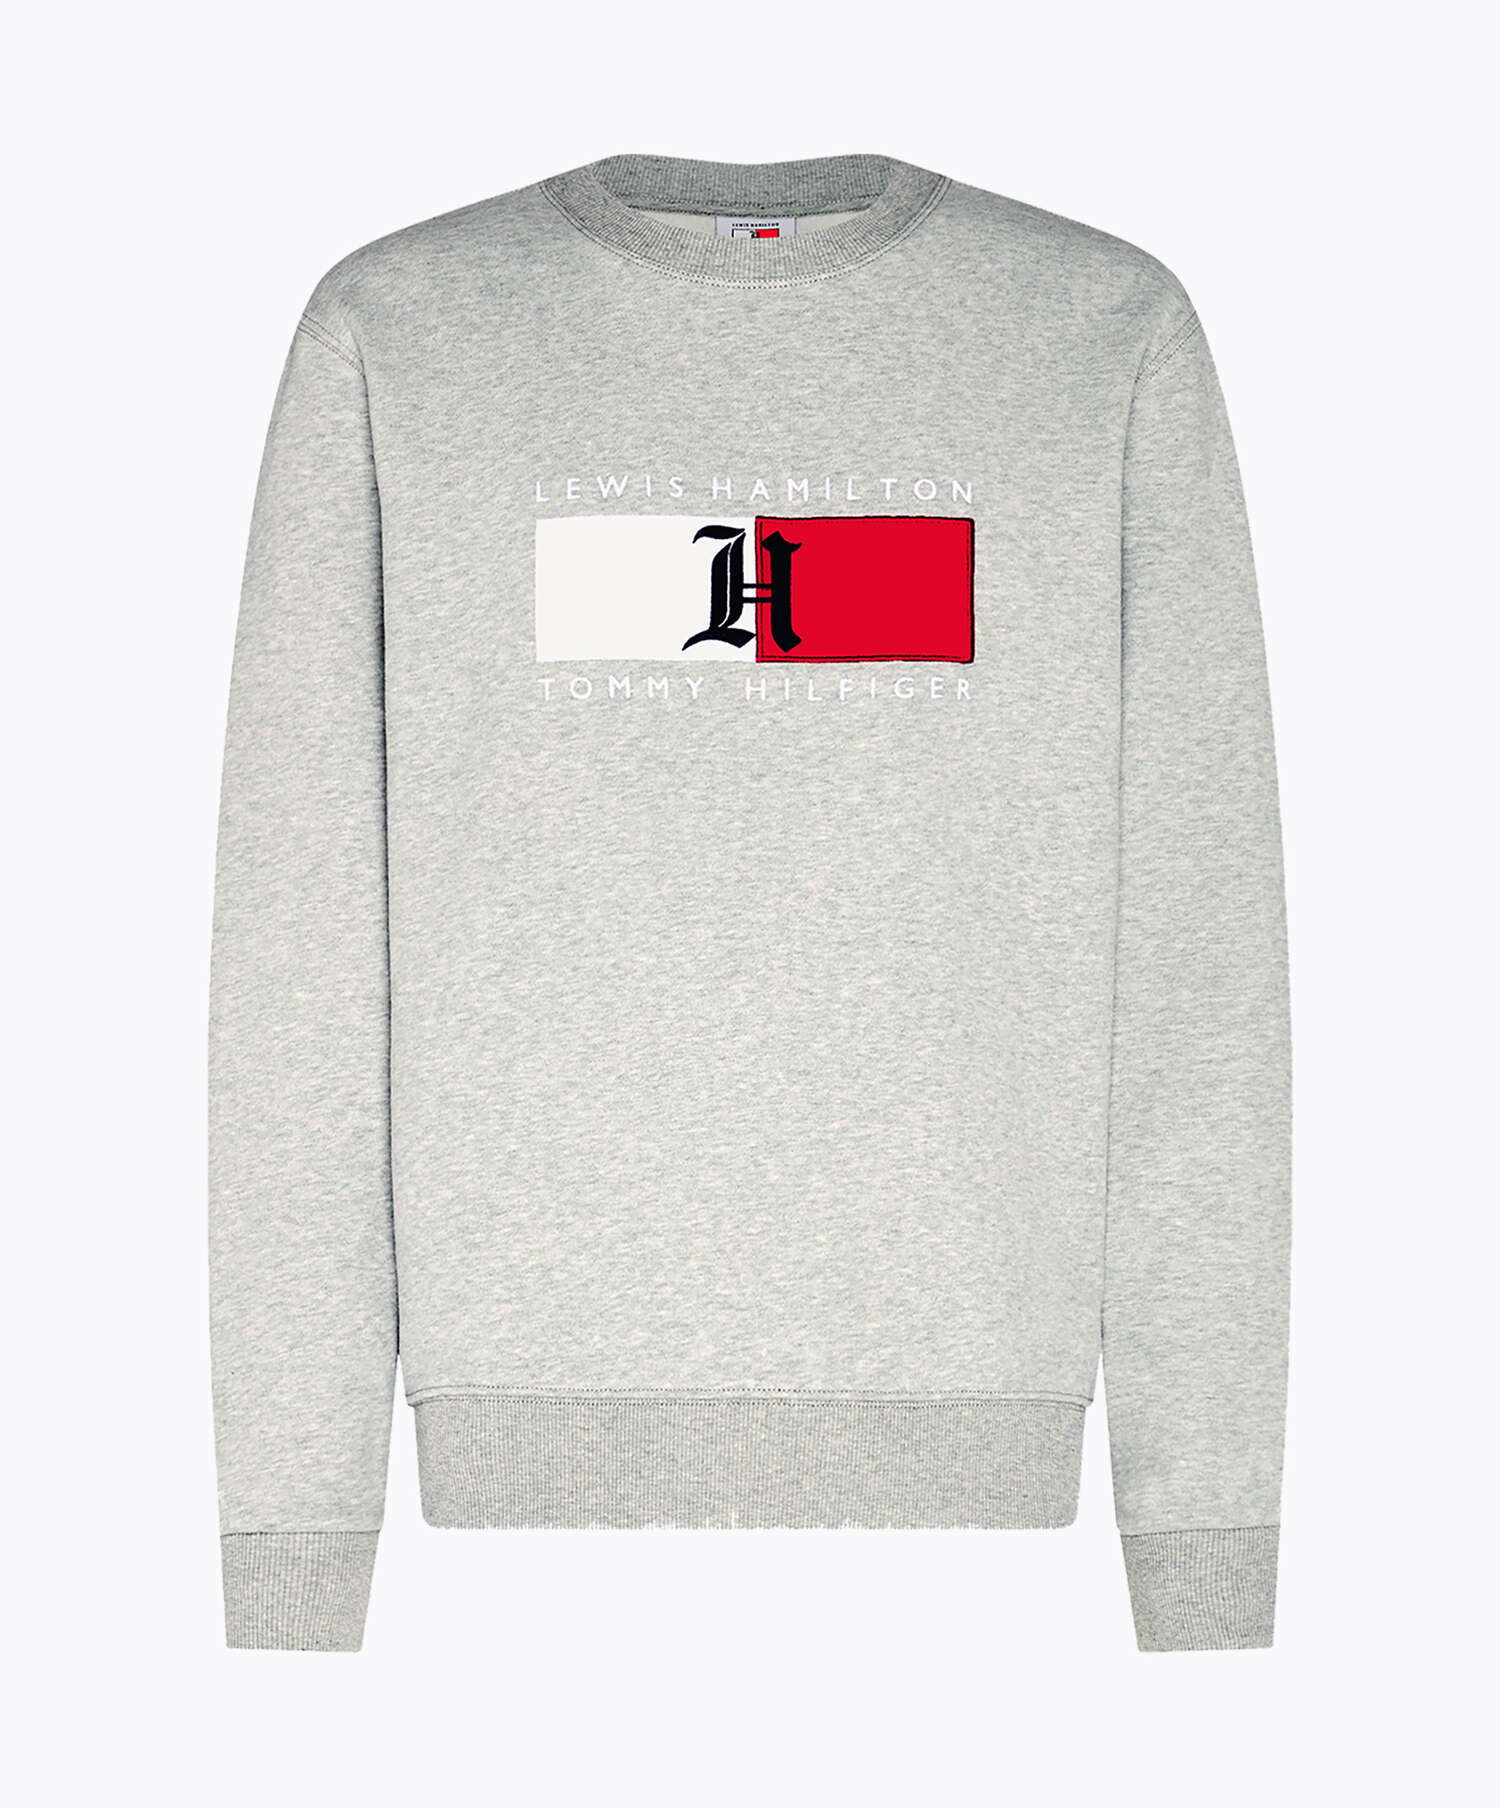 Lewis Hamilton x Tommy Hilfiger Men's Sweatshirt Gray Buy Online at FOOTDISTRICT